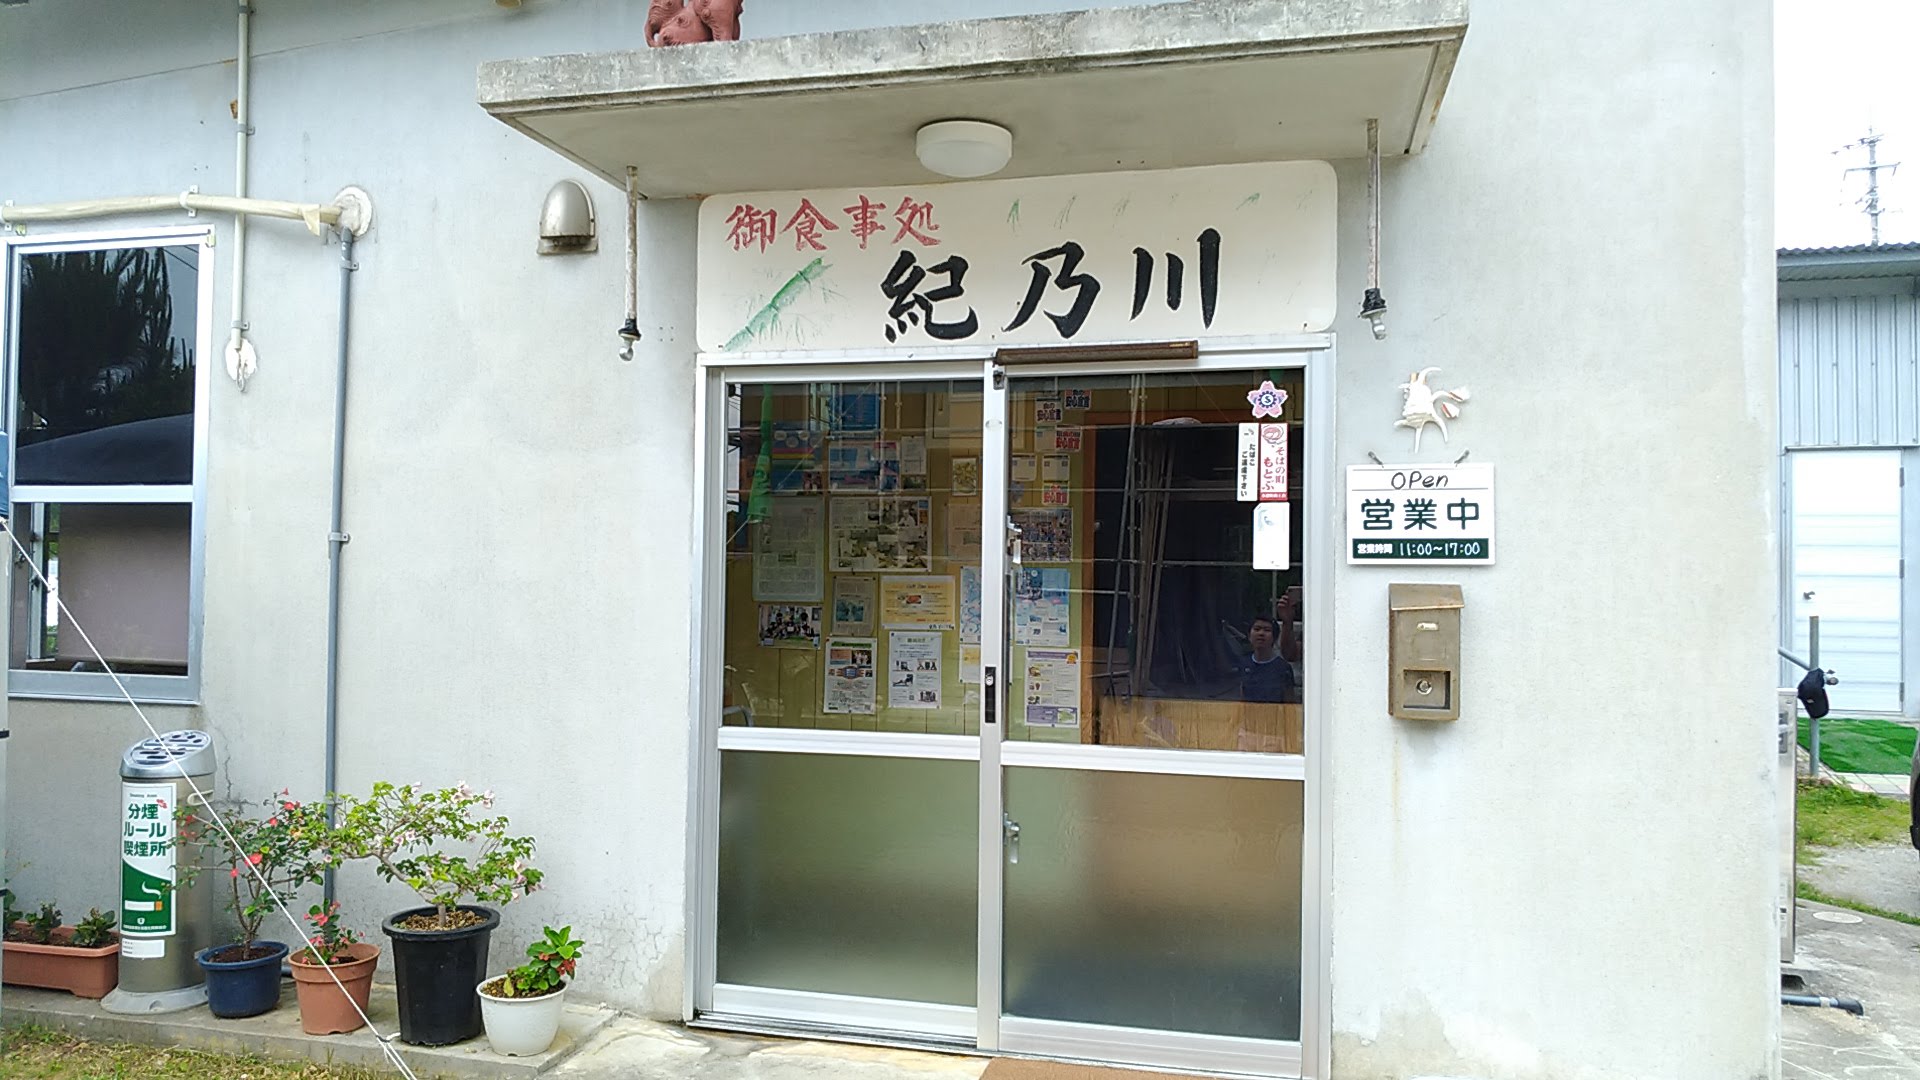 The hidden restaurant Kinokawa in Motobu town, Tonkatsu and Okinawa soba are delicious!